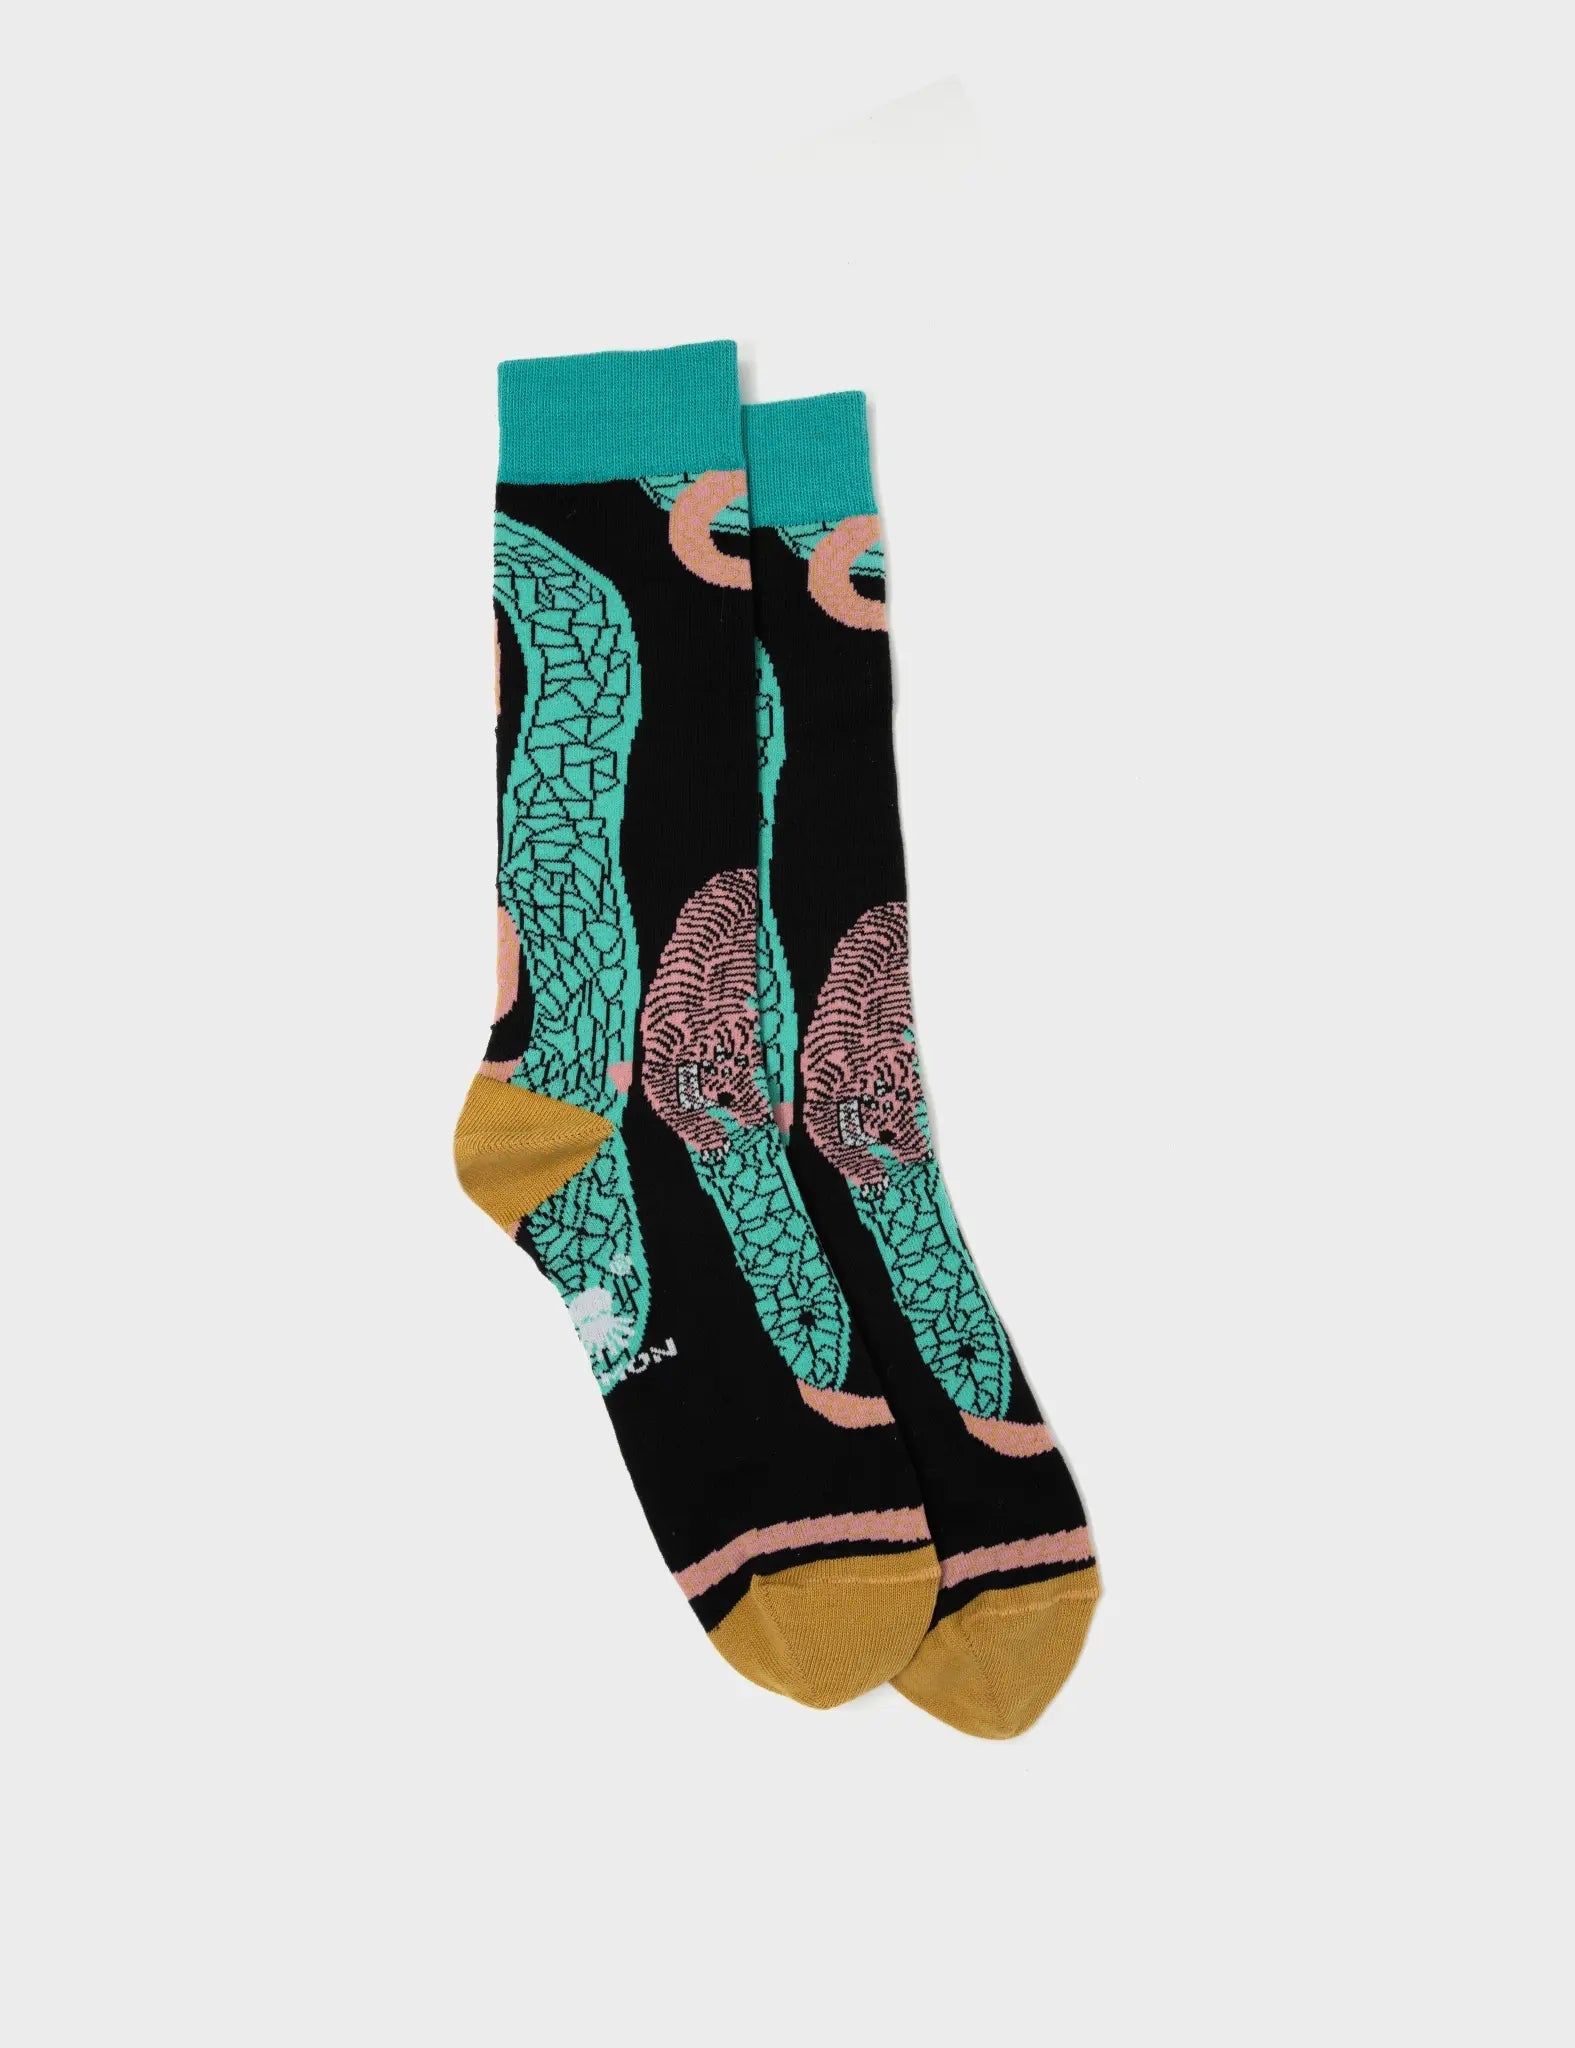 Socks - Tiger And Snake Black And Basil Green - Front